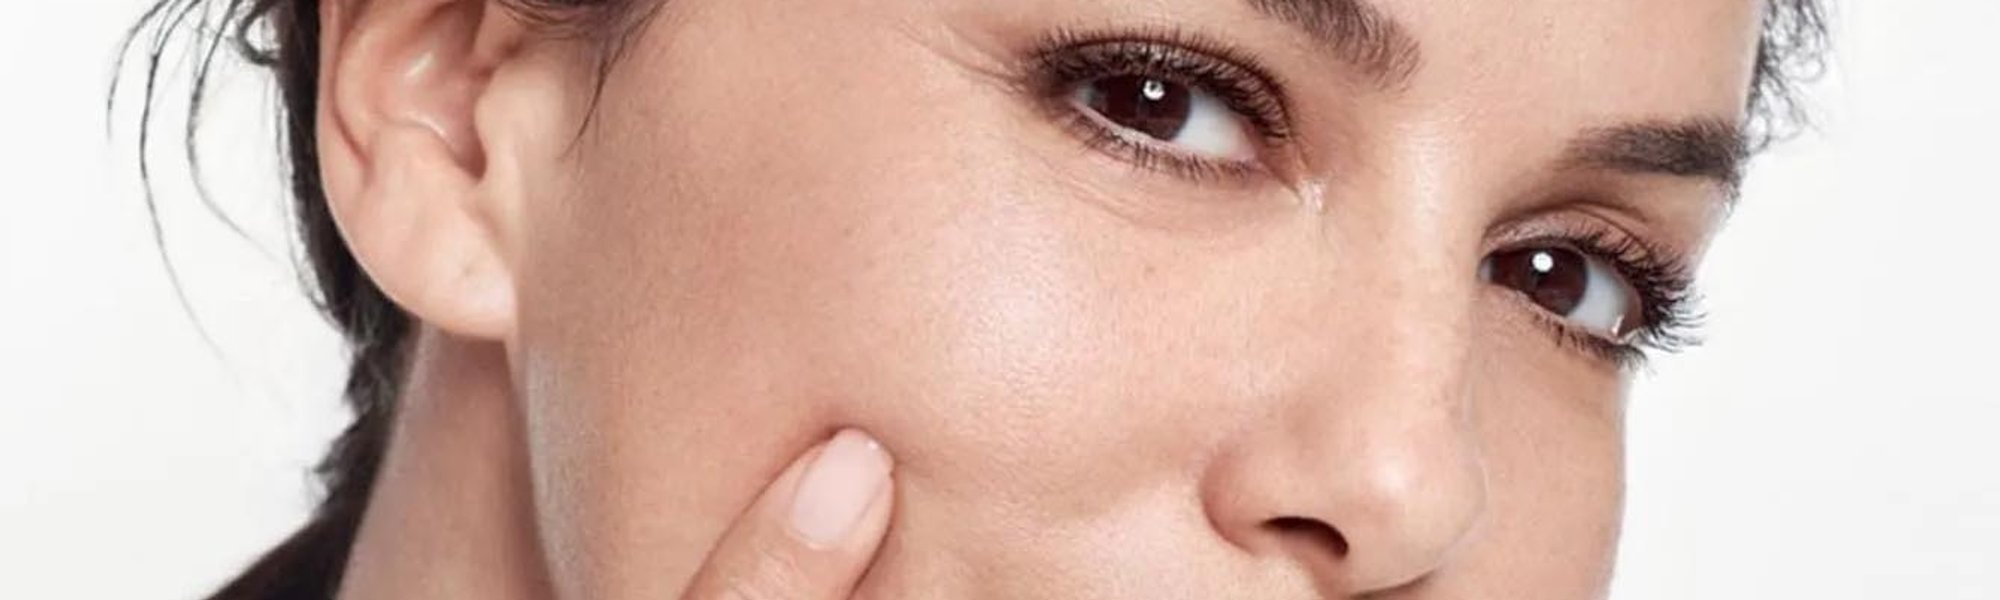 Cómo elegir el mejor sérum facial | L’Oréal Paris